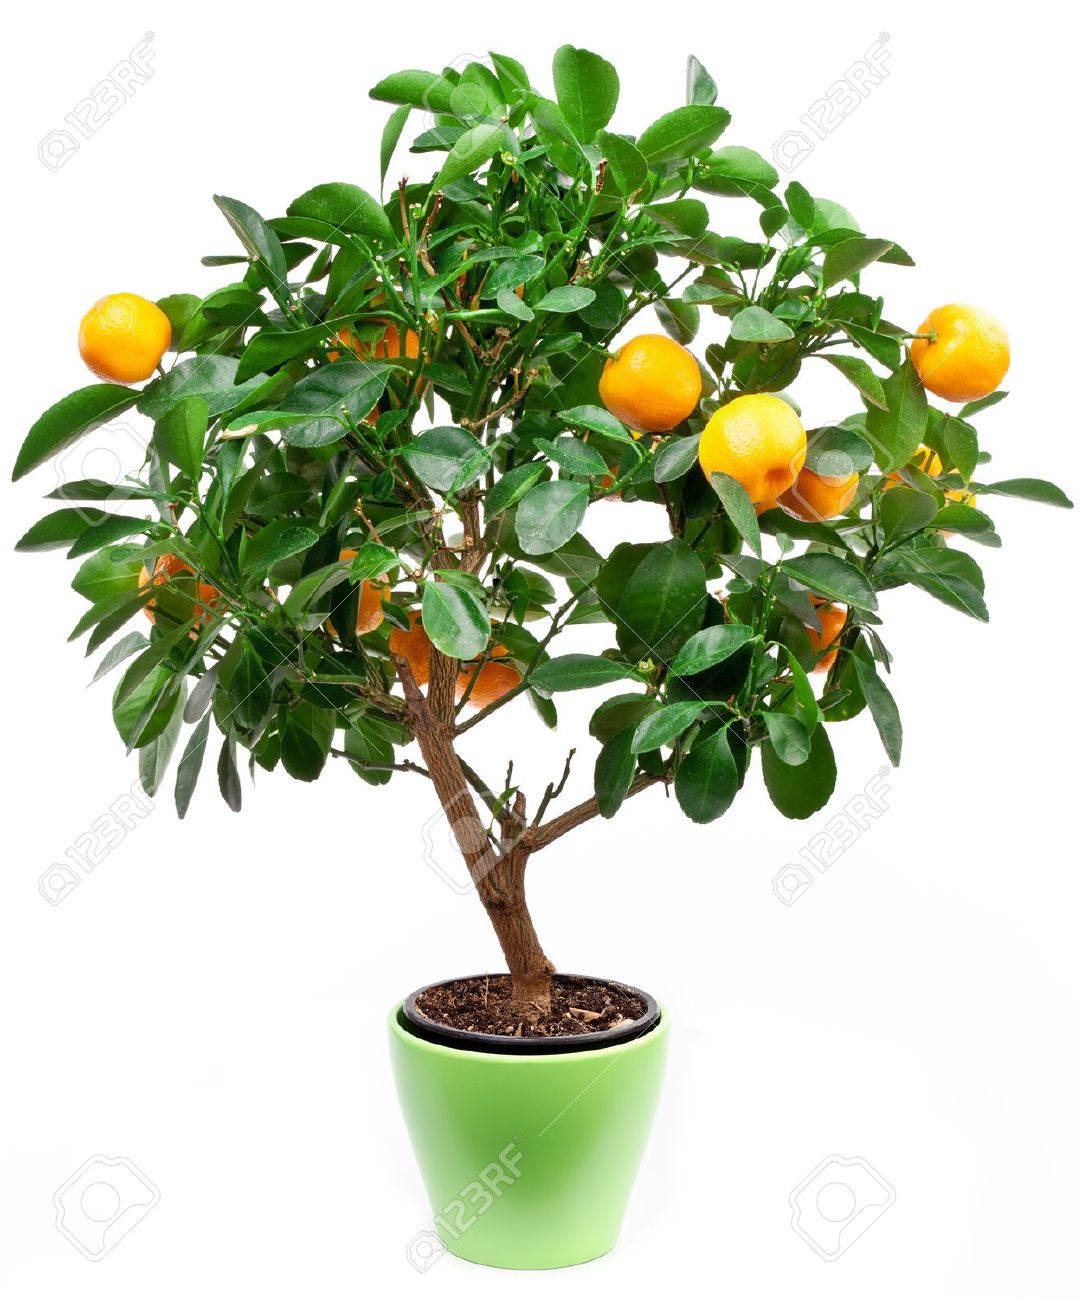 9737684-Small-tangerines-tree-on-white-background--Stock-Photo-tree-lemon-orange